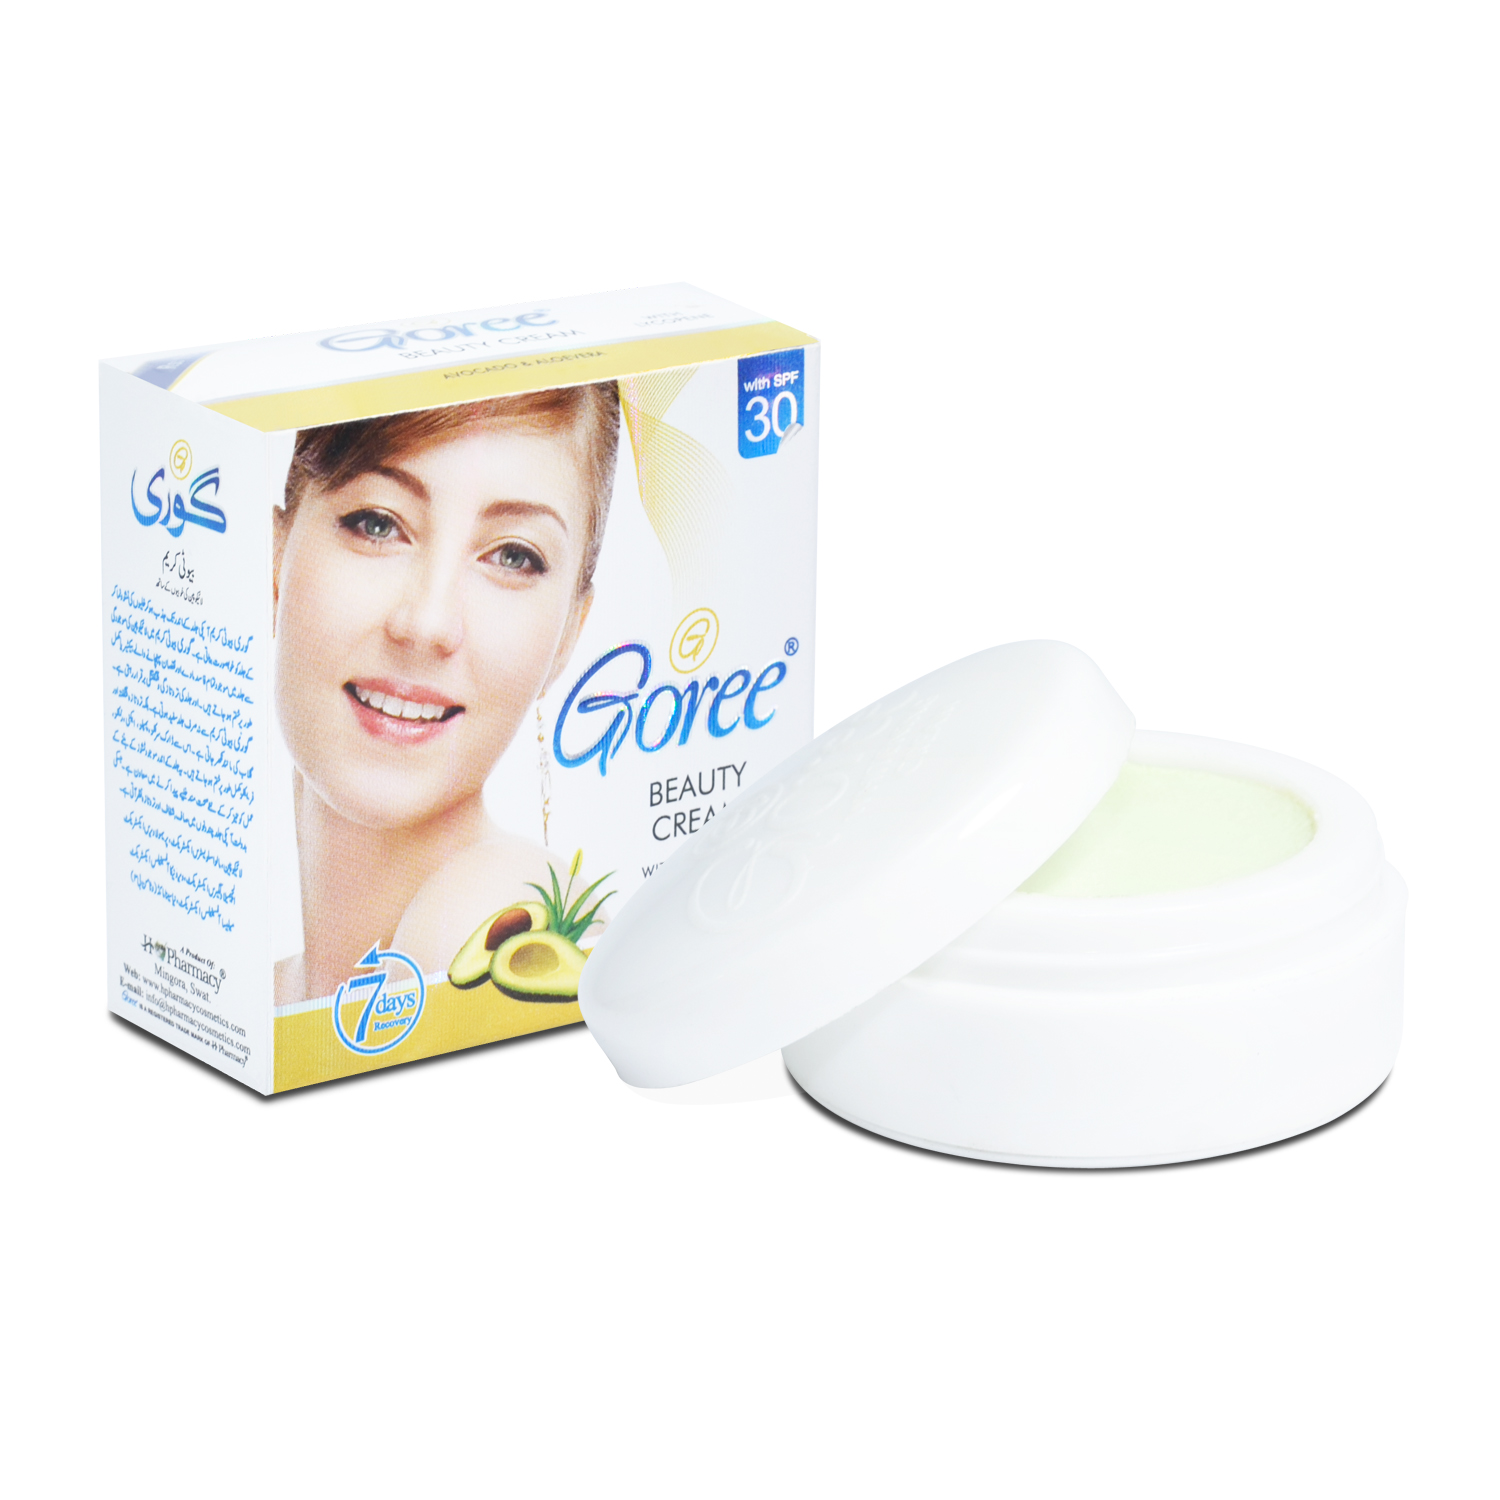 Goree Beauty Cream With LYCOPENE Features (30-Gram JAR) - Goree 